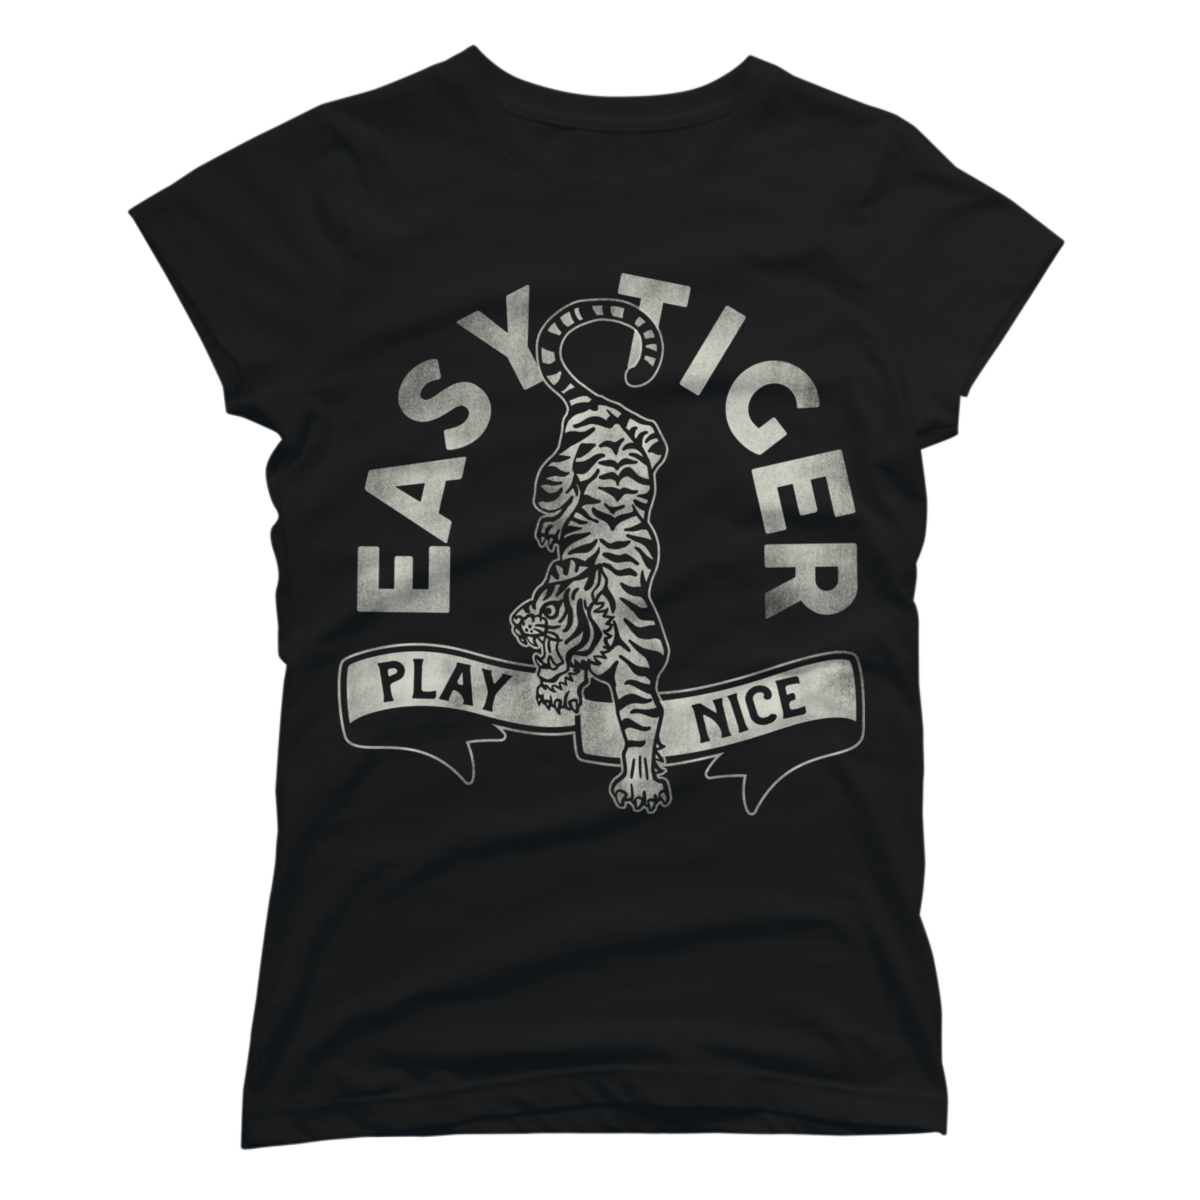 easy tiger shirts